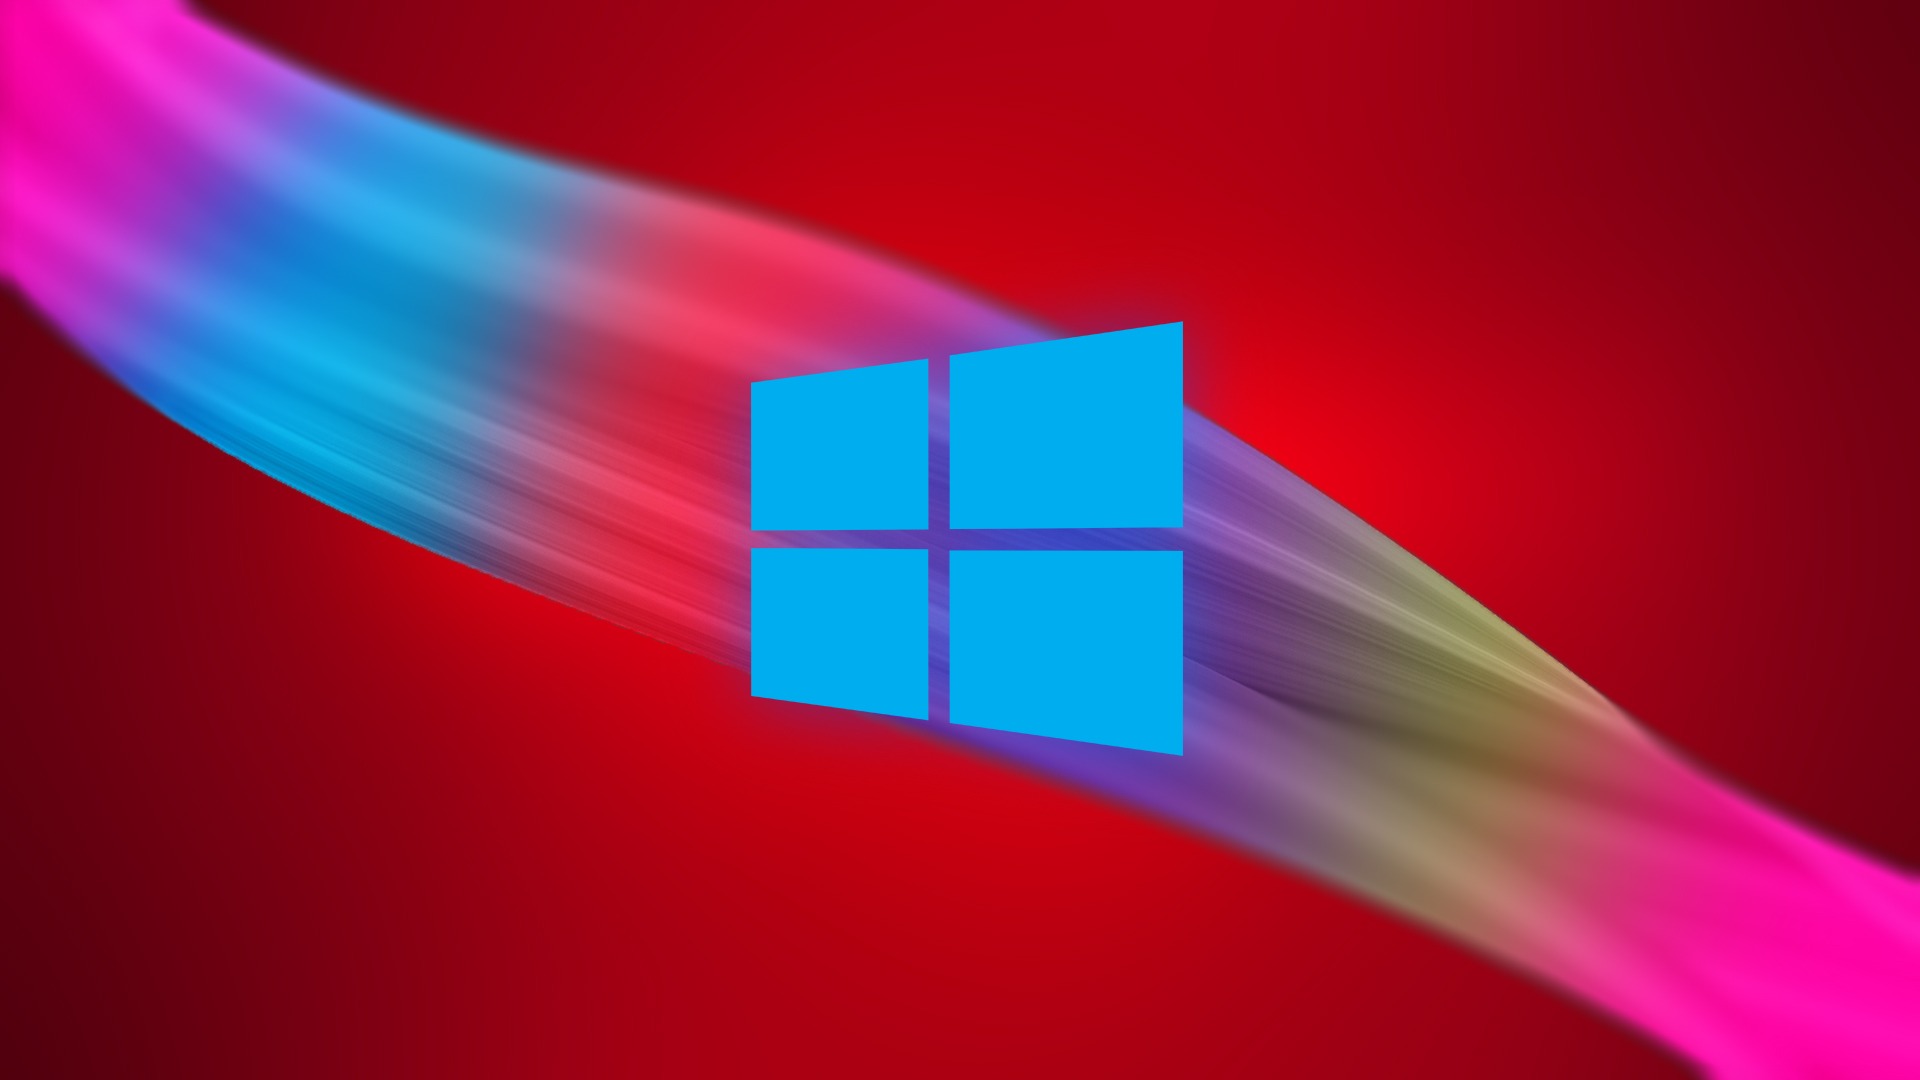 Windows 7 Hd Wallpapers 1080p